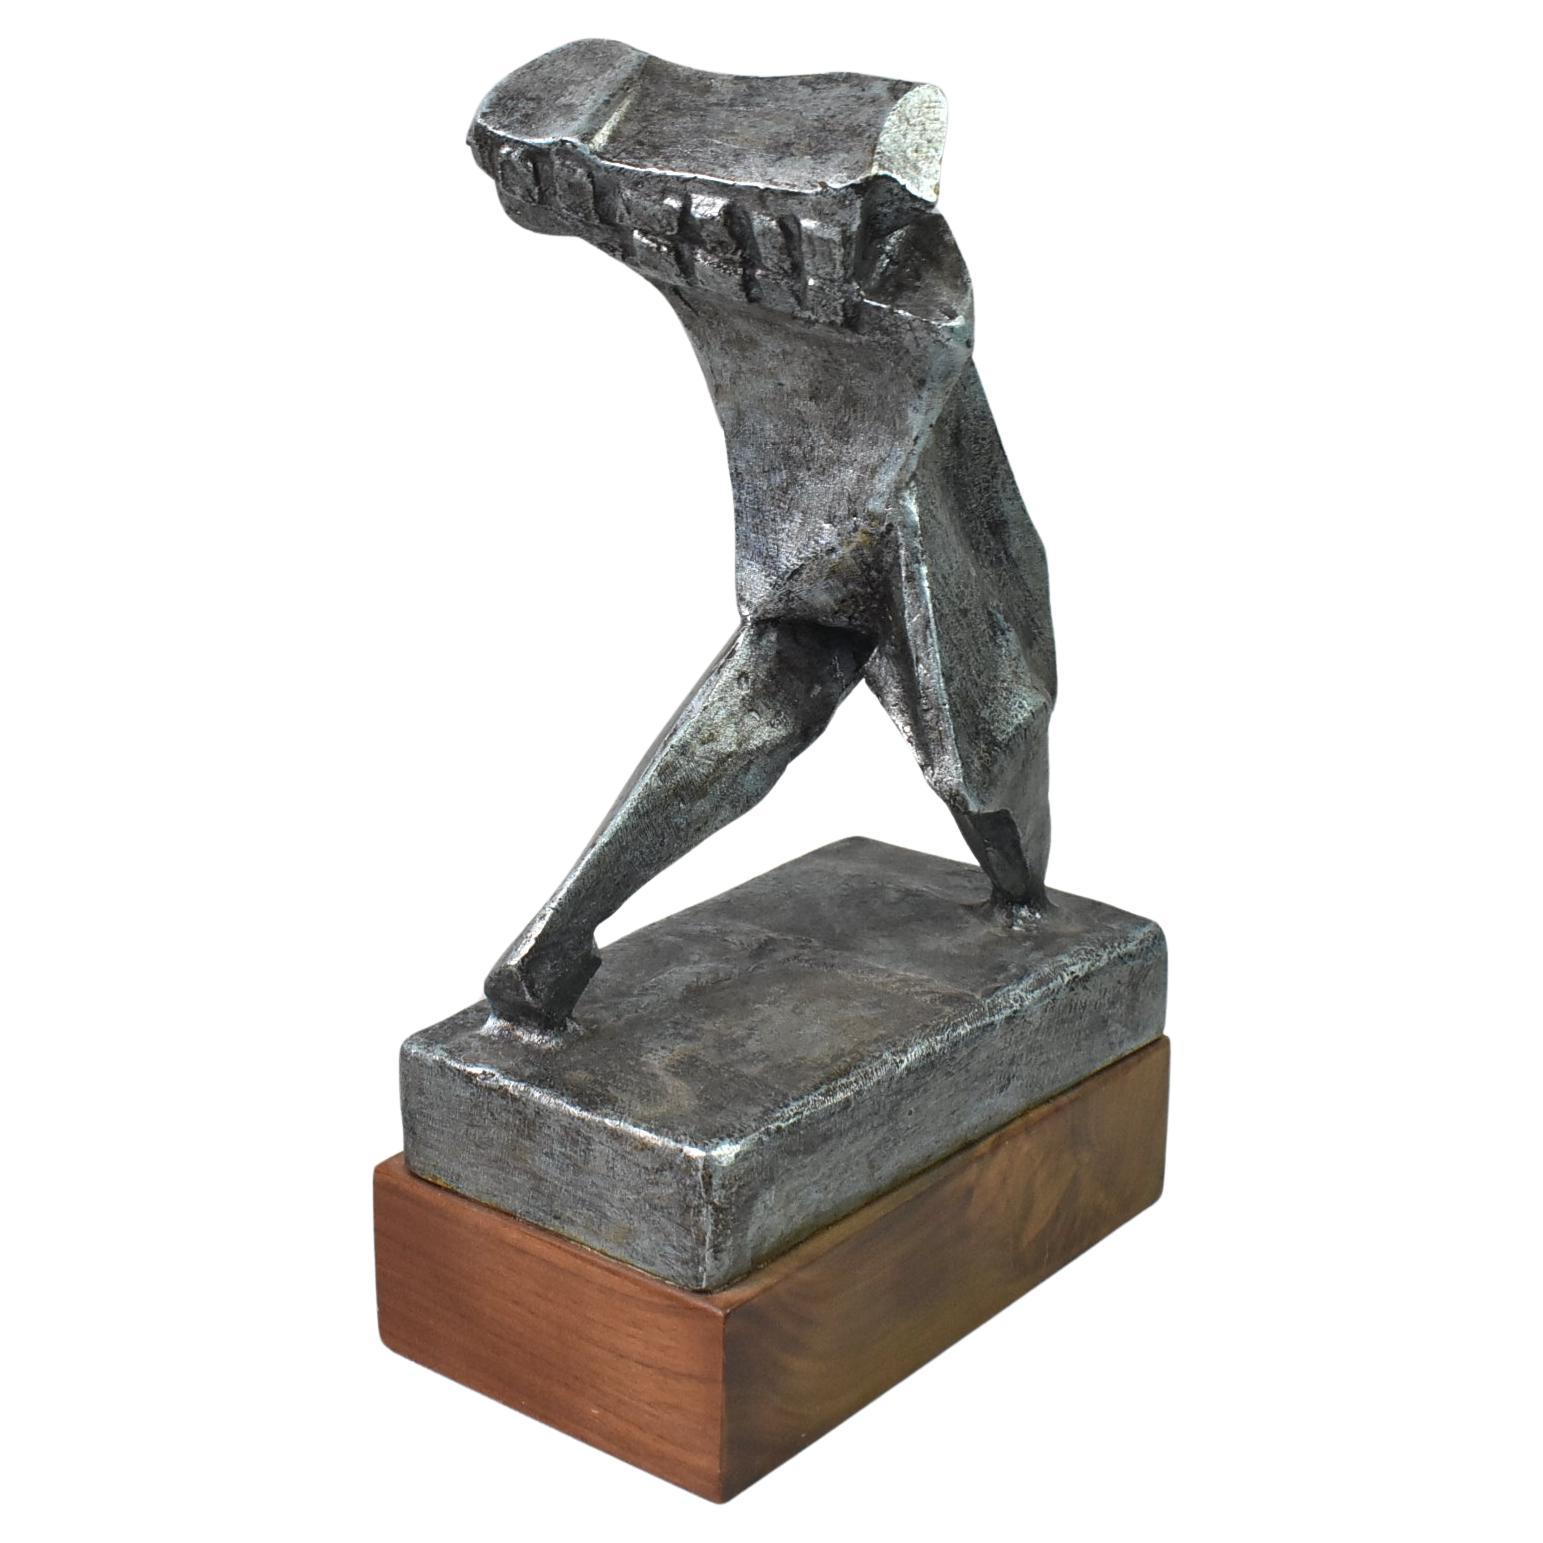 Carole Harrison Cast Bronze Abstract Sculpture